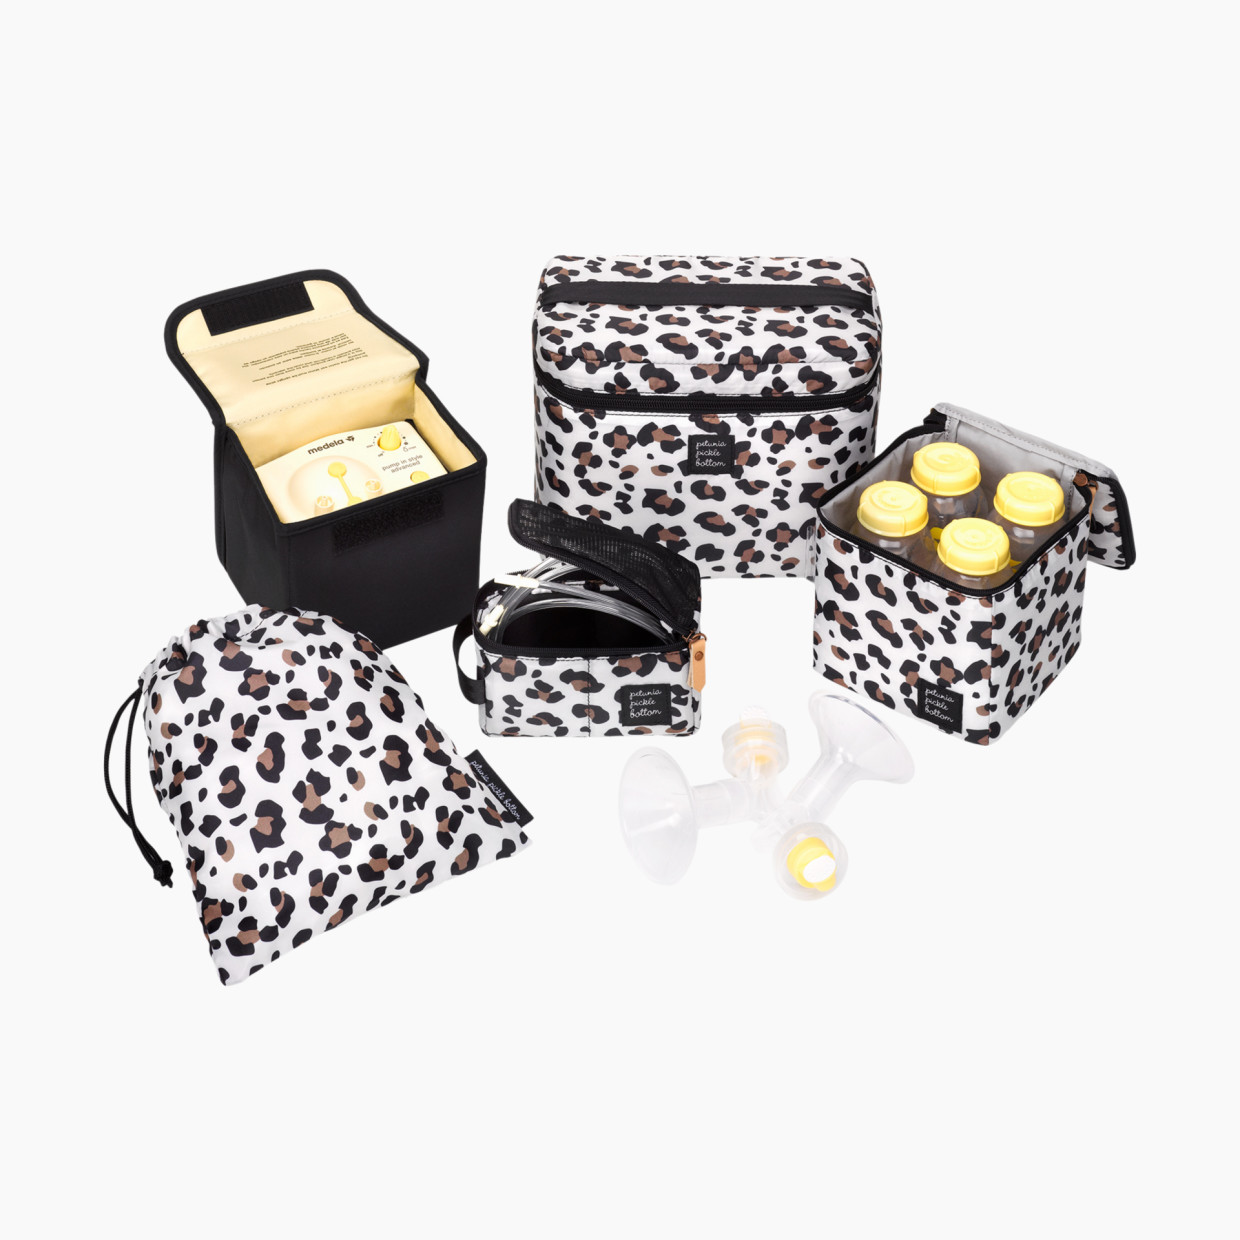 Petunia Pickle Bottom Prompt Pump Kit - Breast Pump Accessories Bag - Moon Leopard.